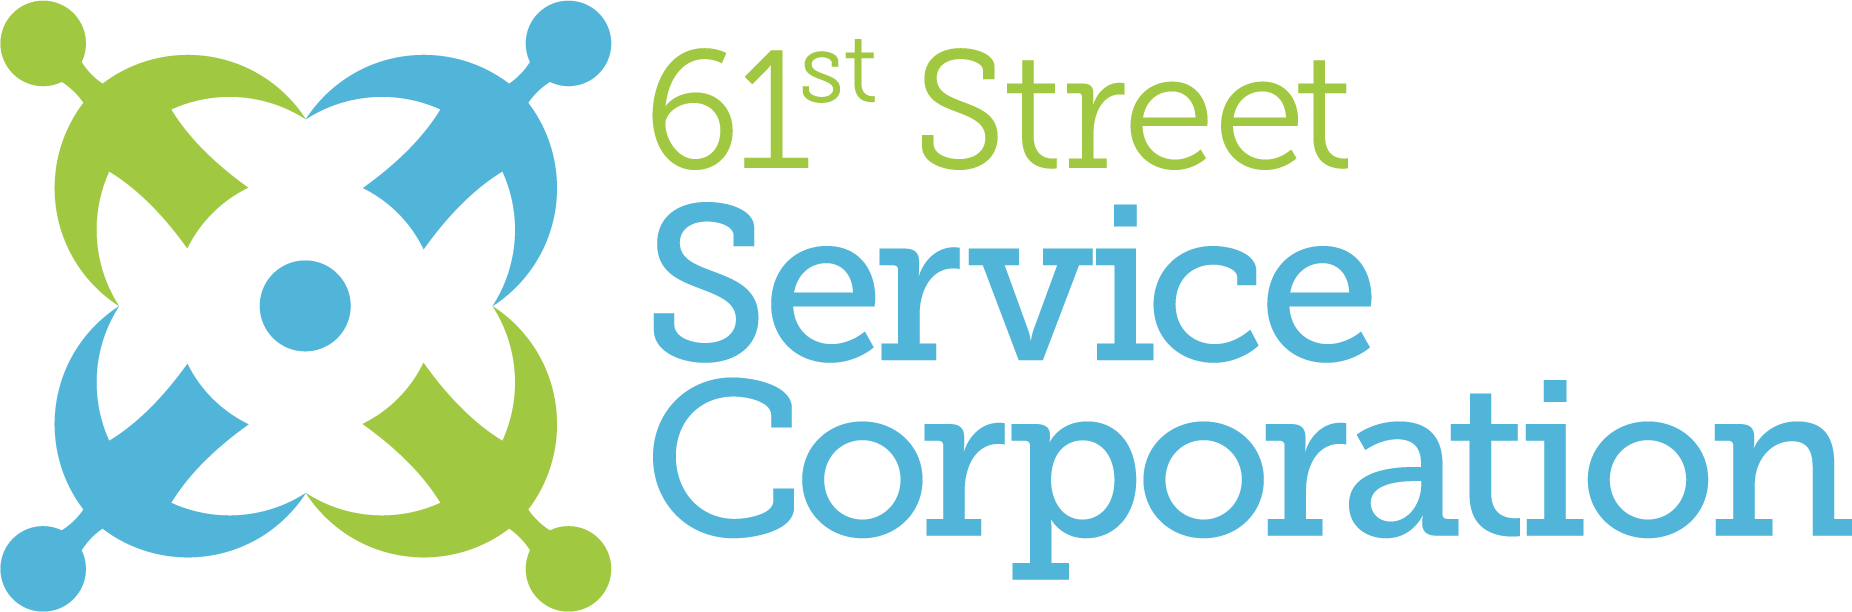 61st Street Service Corporation: Home